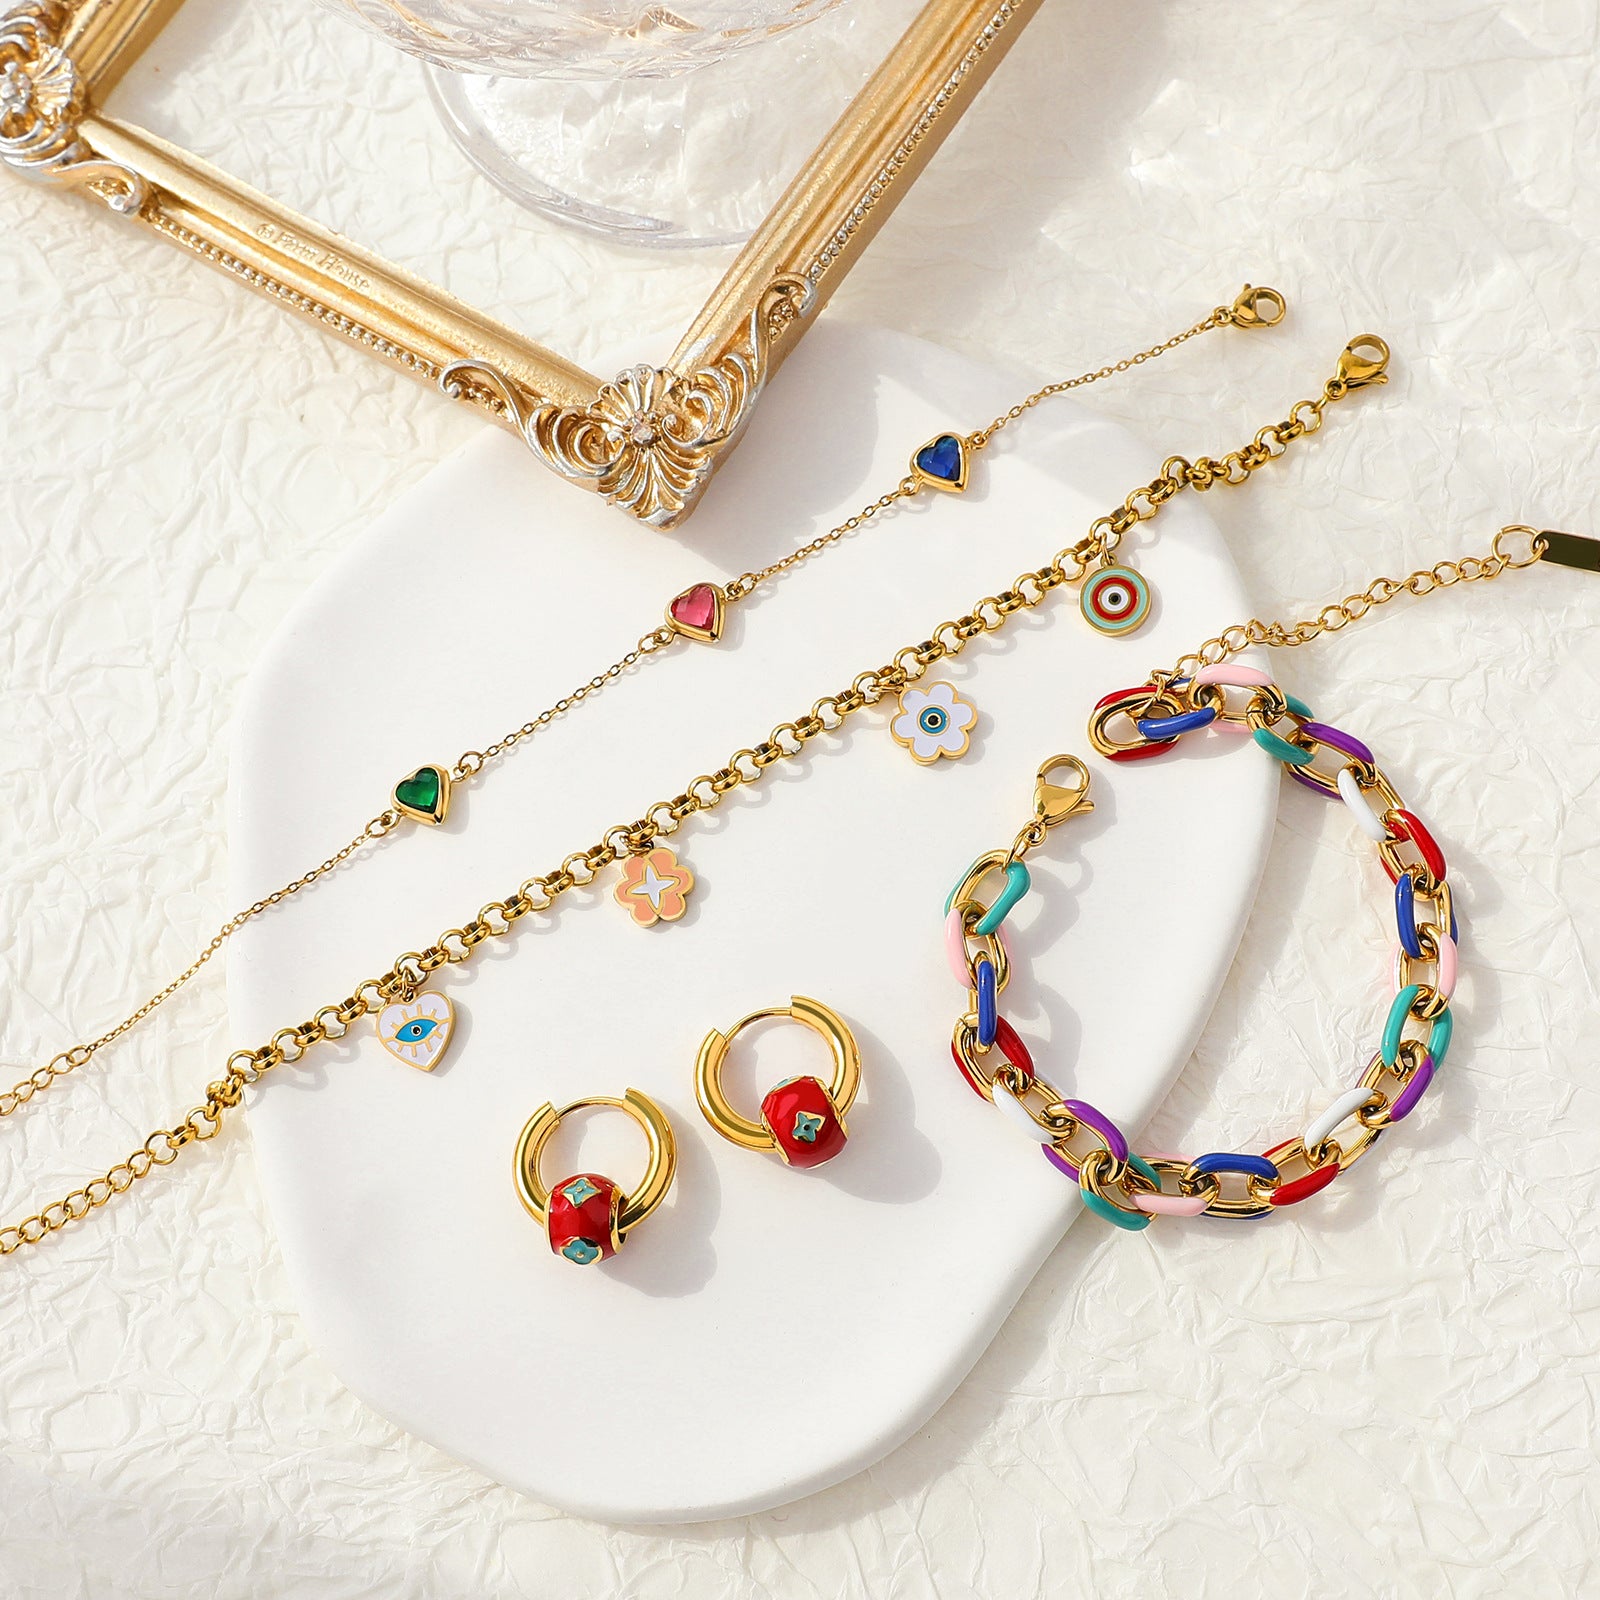 Edgy Hip-Hop Trendy Colorful Drip Oil Bracelet and Enamel Earrings  UponBasics   